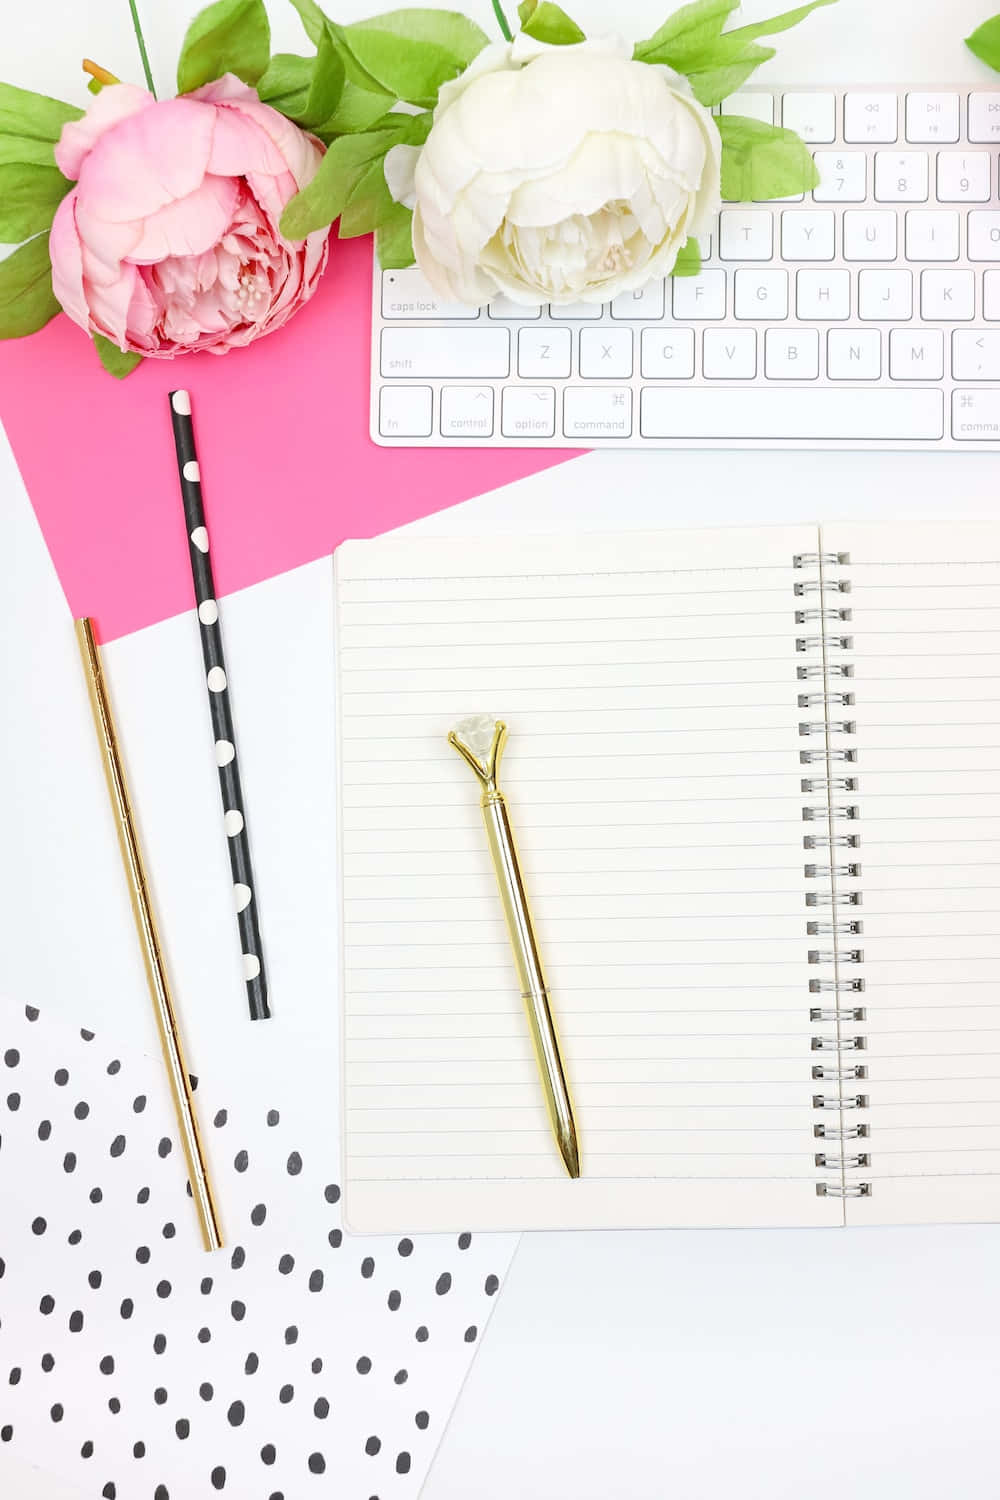 Ennotesbog, En Pen, Blomster Og En Tastatur På Et Hvidt Bord